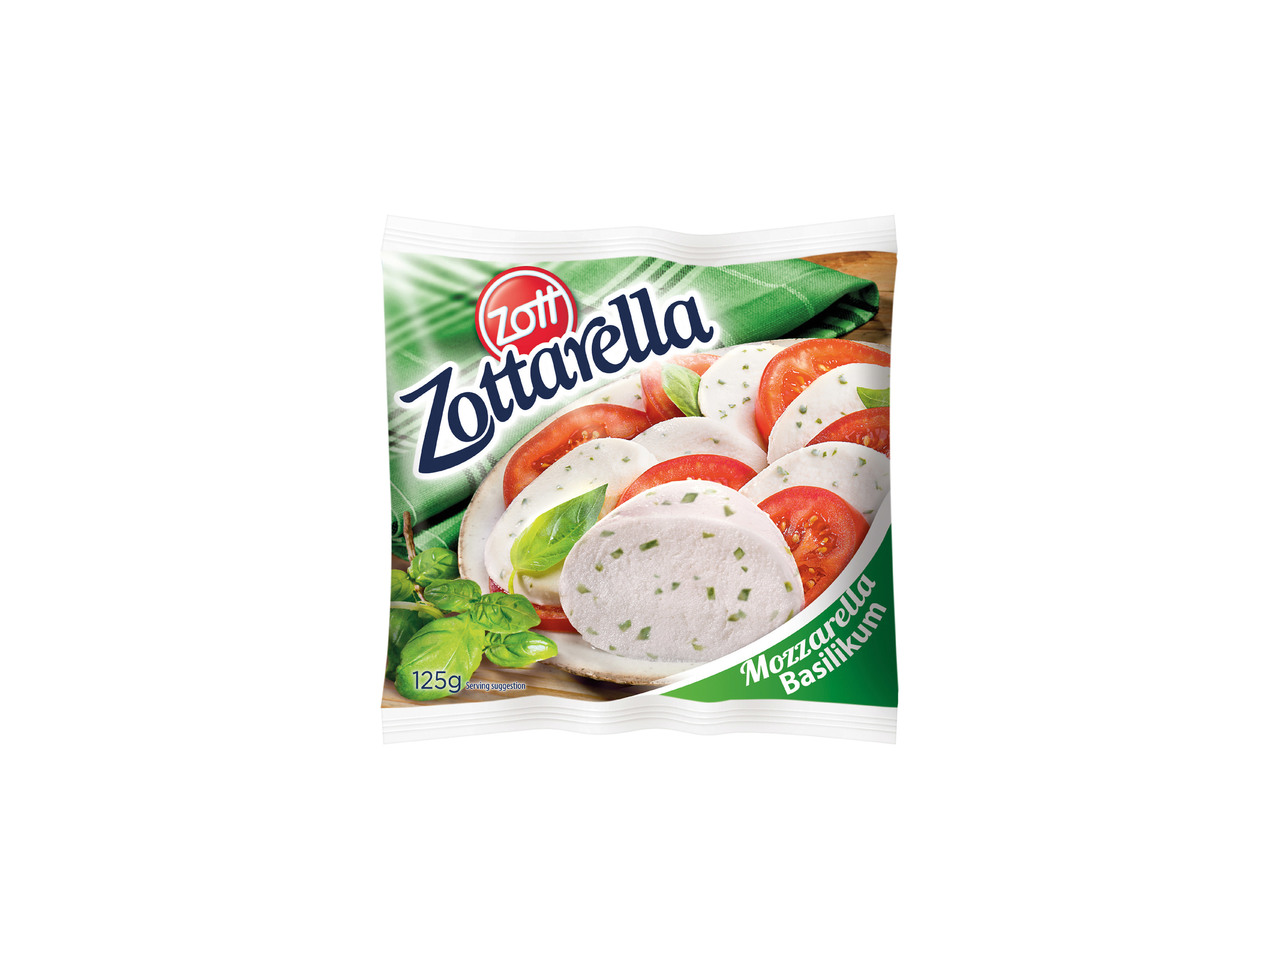 Zottarella classic / Zottarella s bazalkou